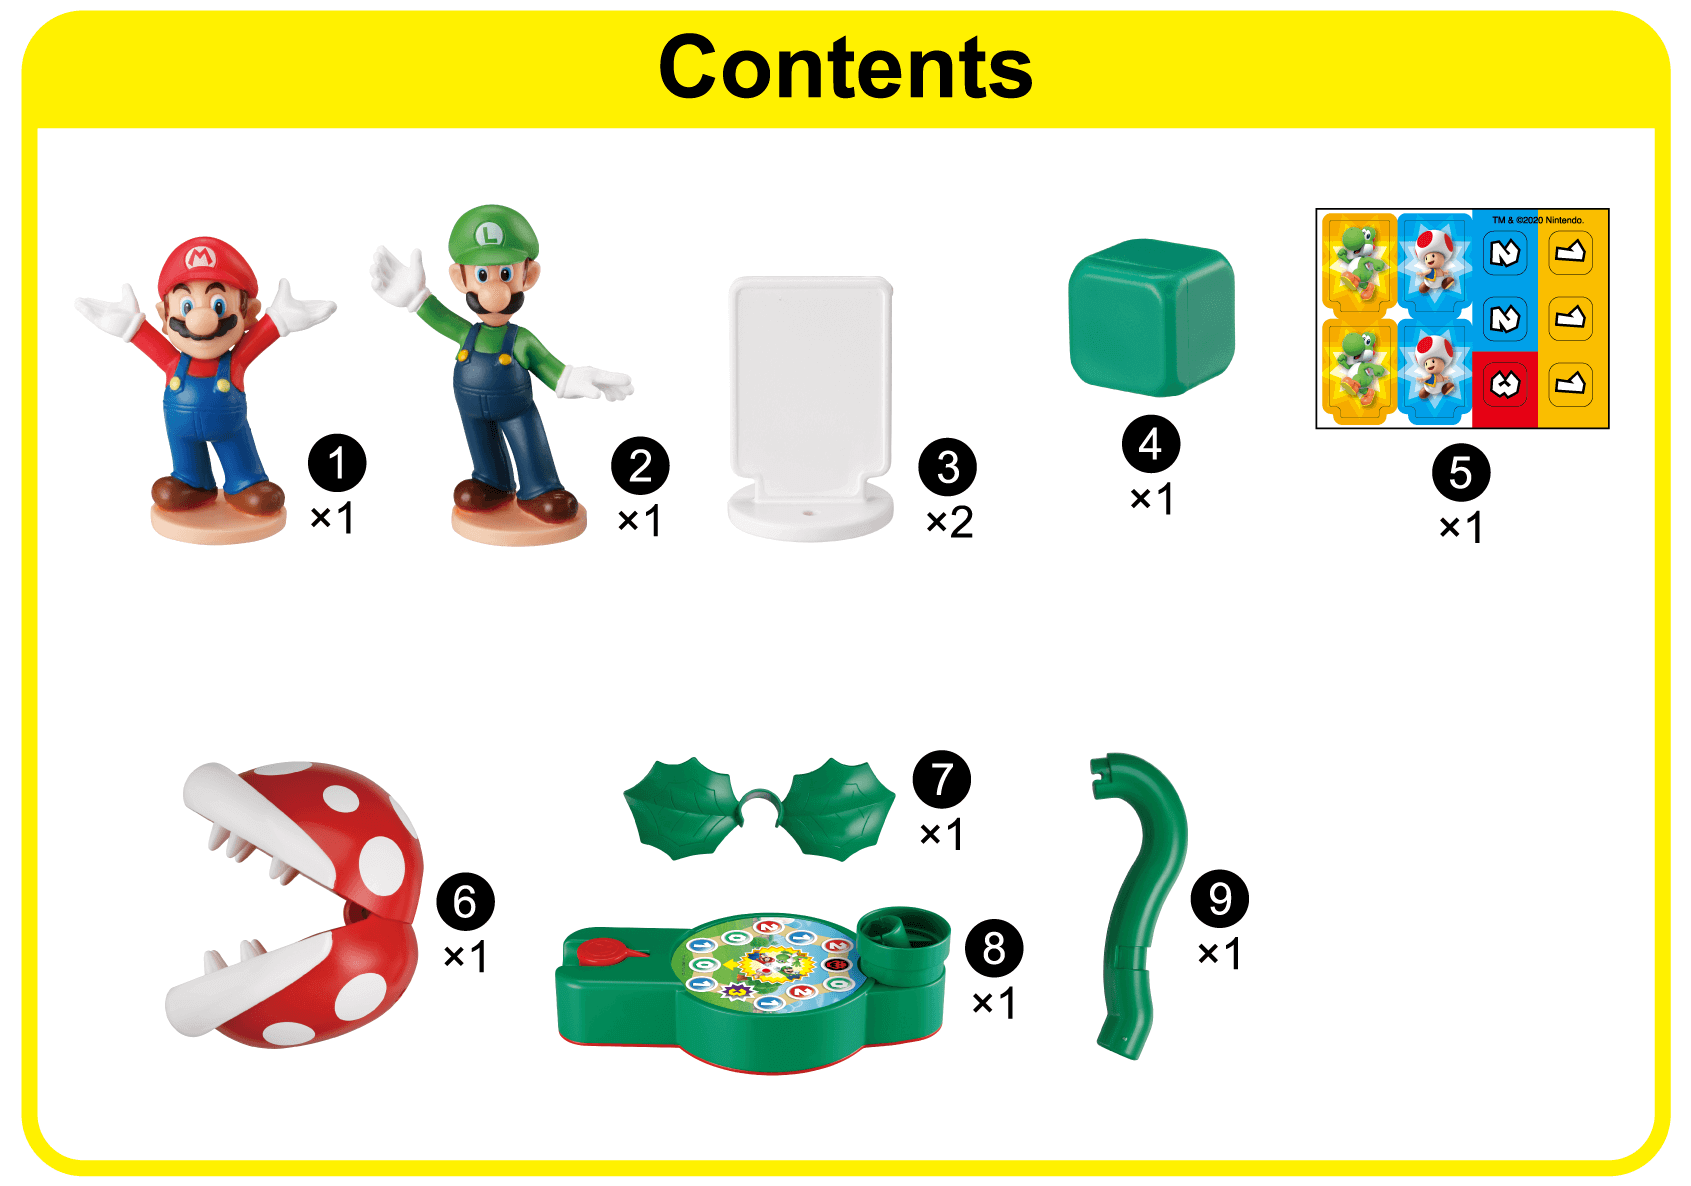 Mario Figure, Luigi Figure, Character Plate x2, Dice, Label Sheet, Piranha Plant Head, Leaf, Base, Stem